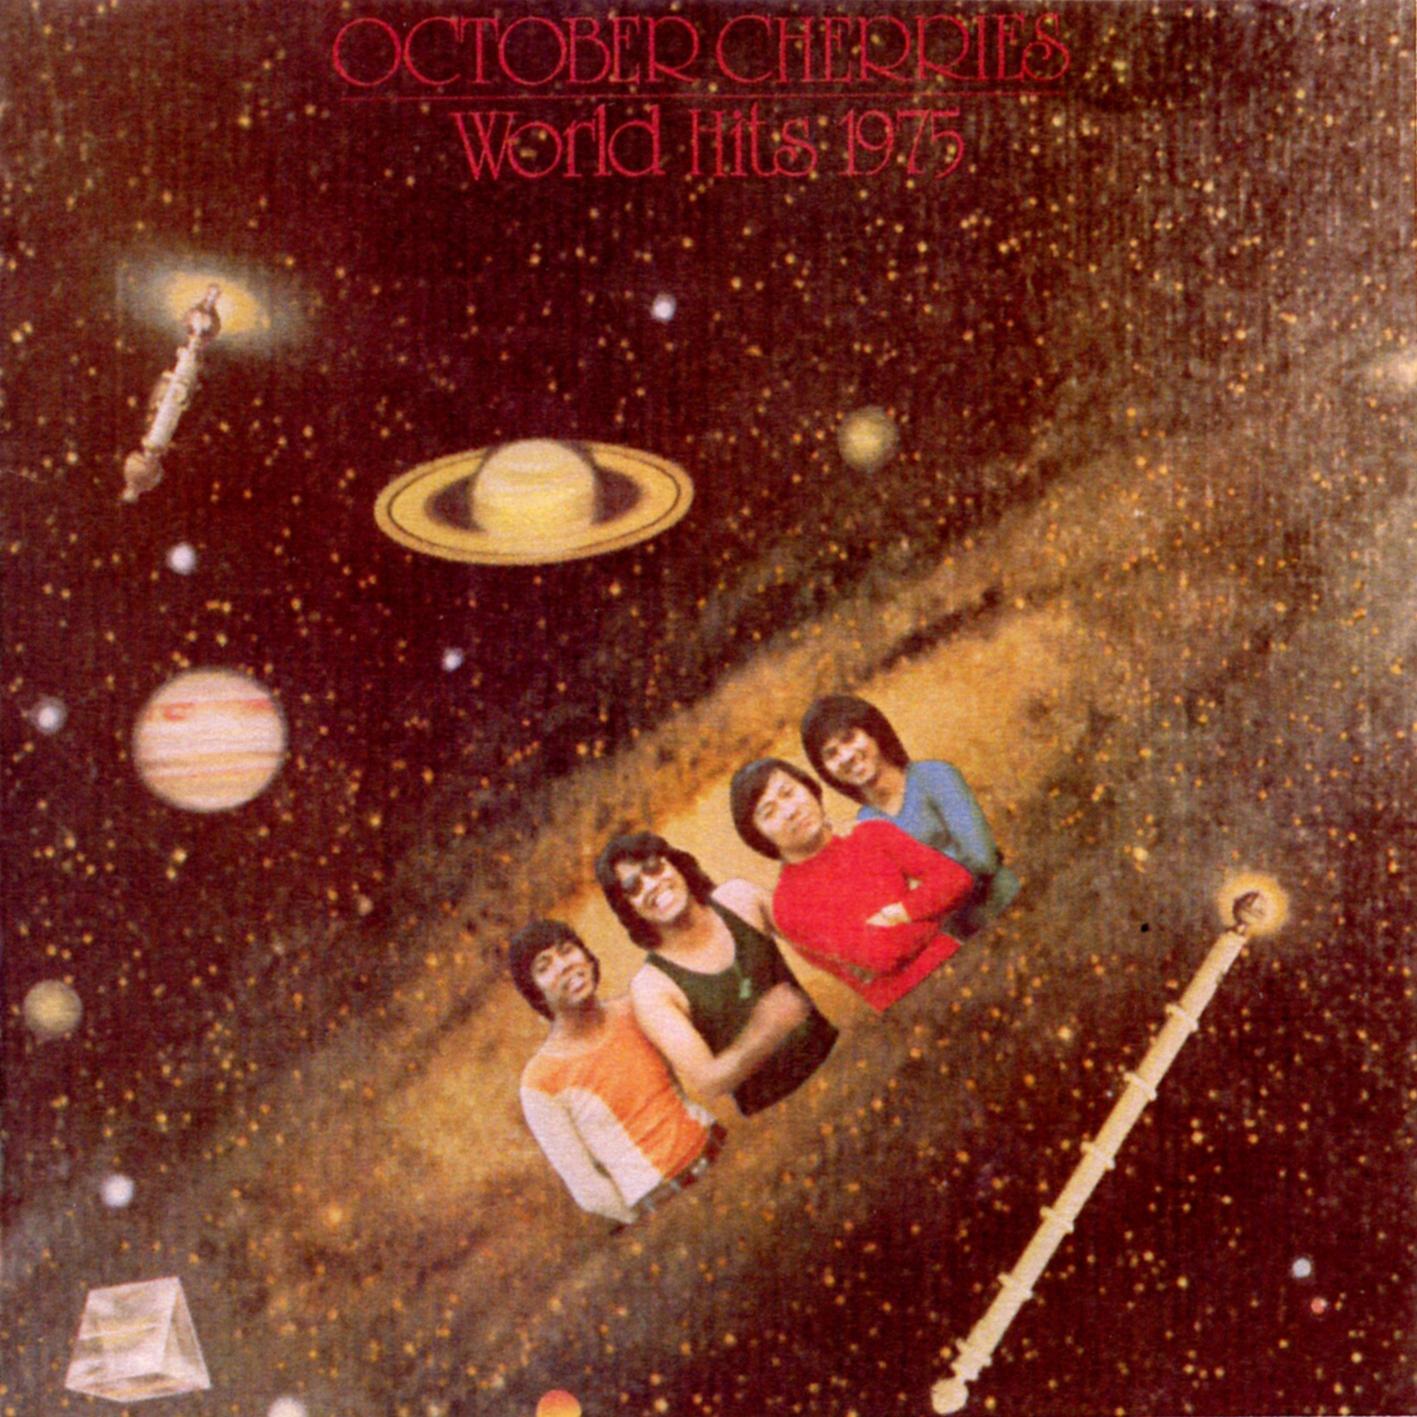 October Cherries World Hits 1975